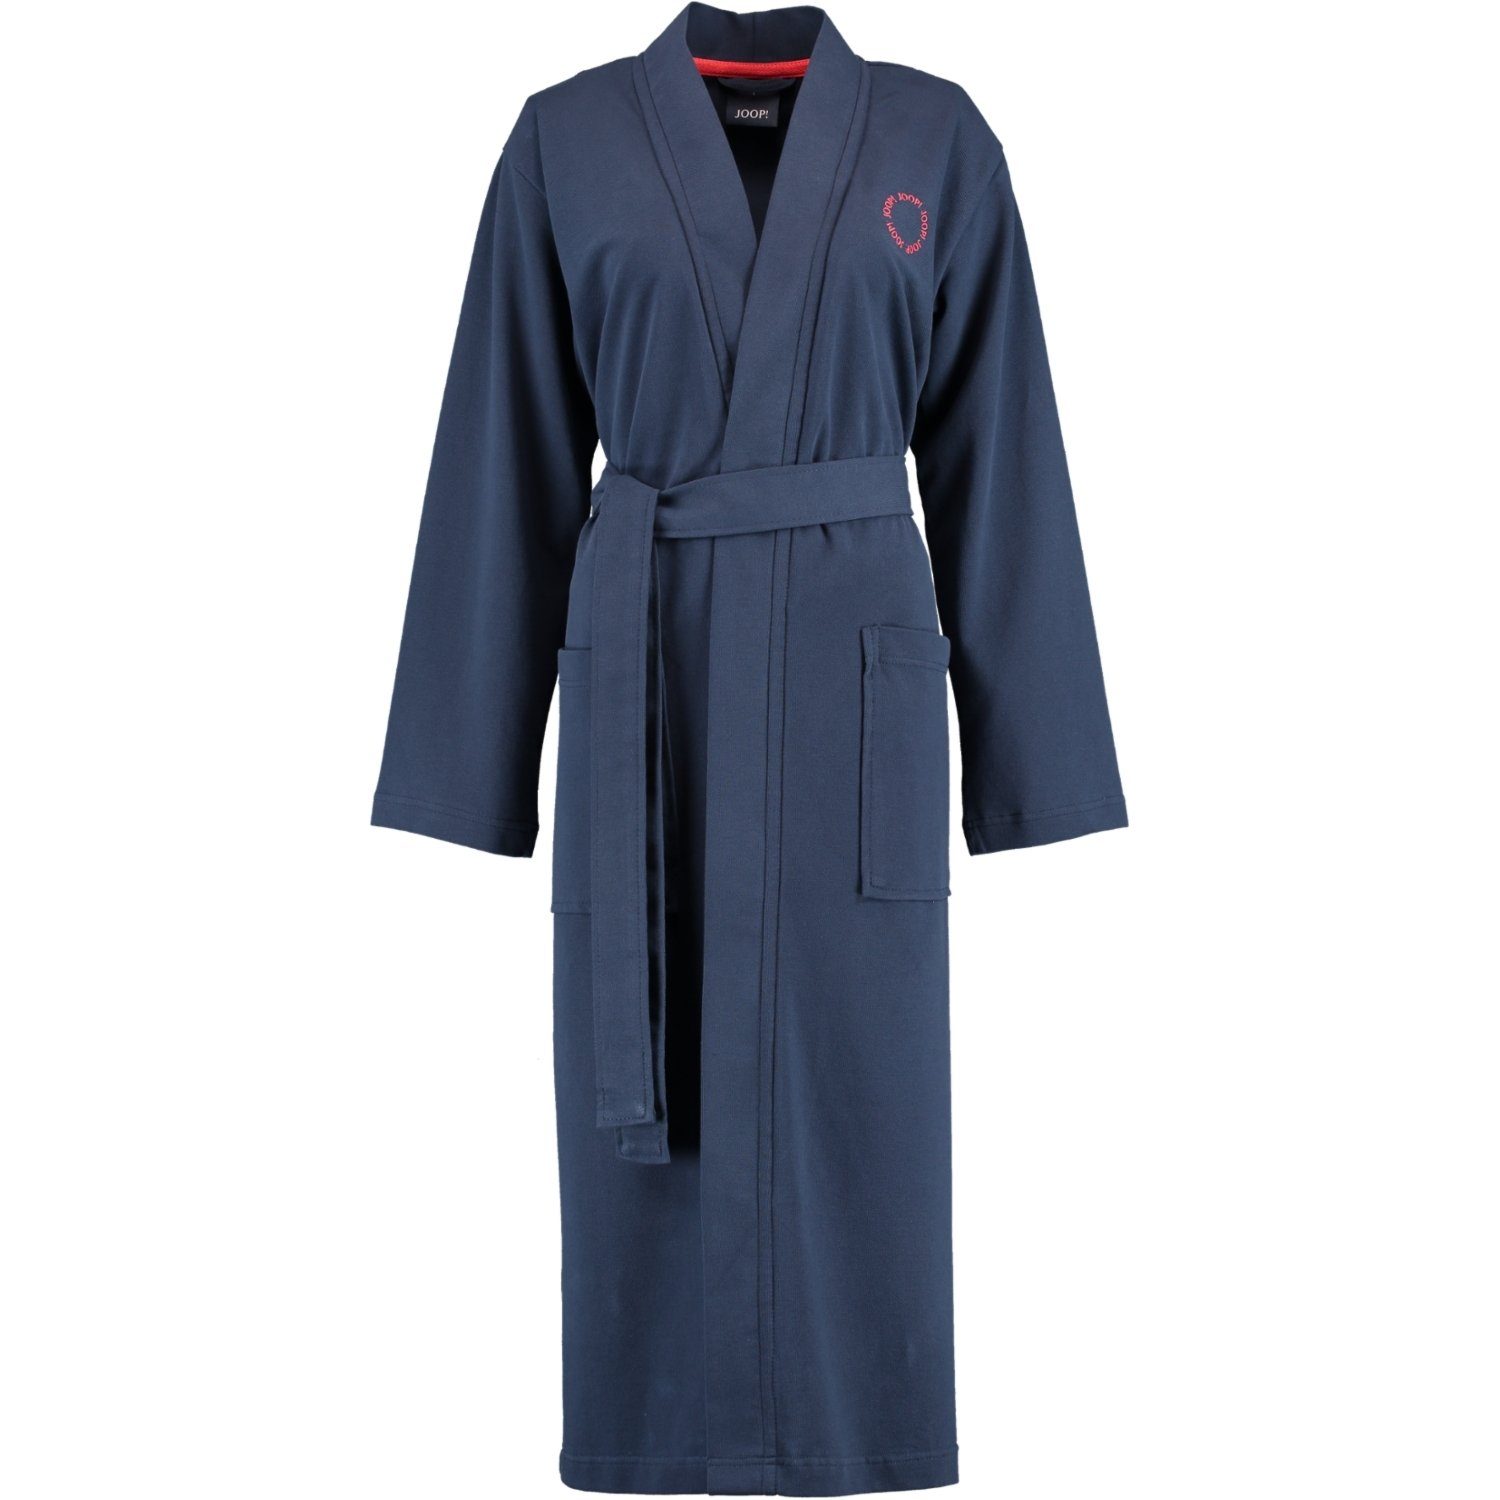 Joop! Damenbademantel 1654 Kimono Pique, Kimono, 100% Baumwolle Marine (12)